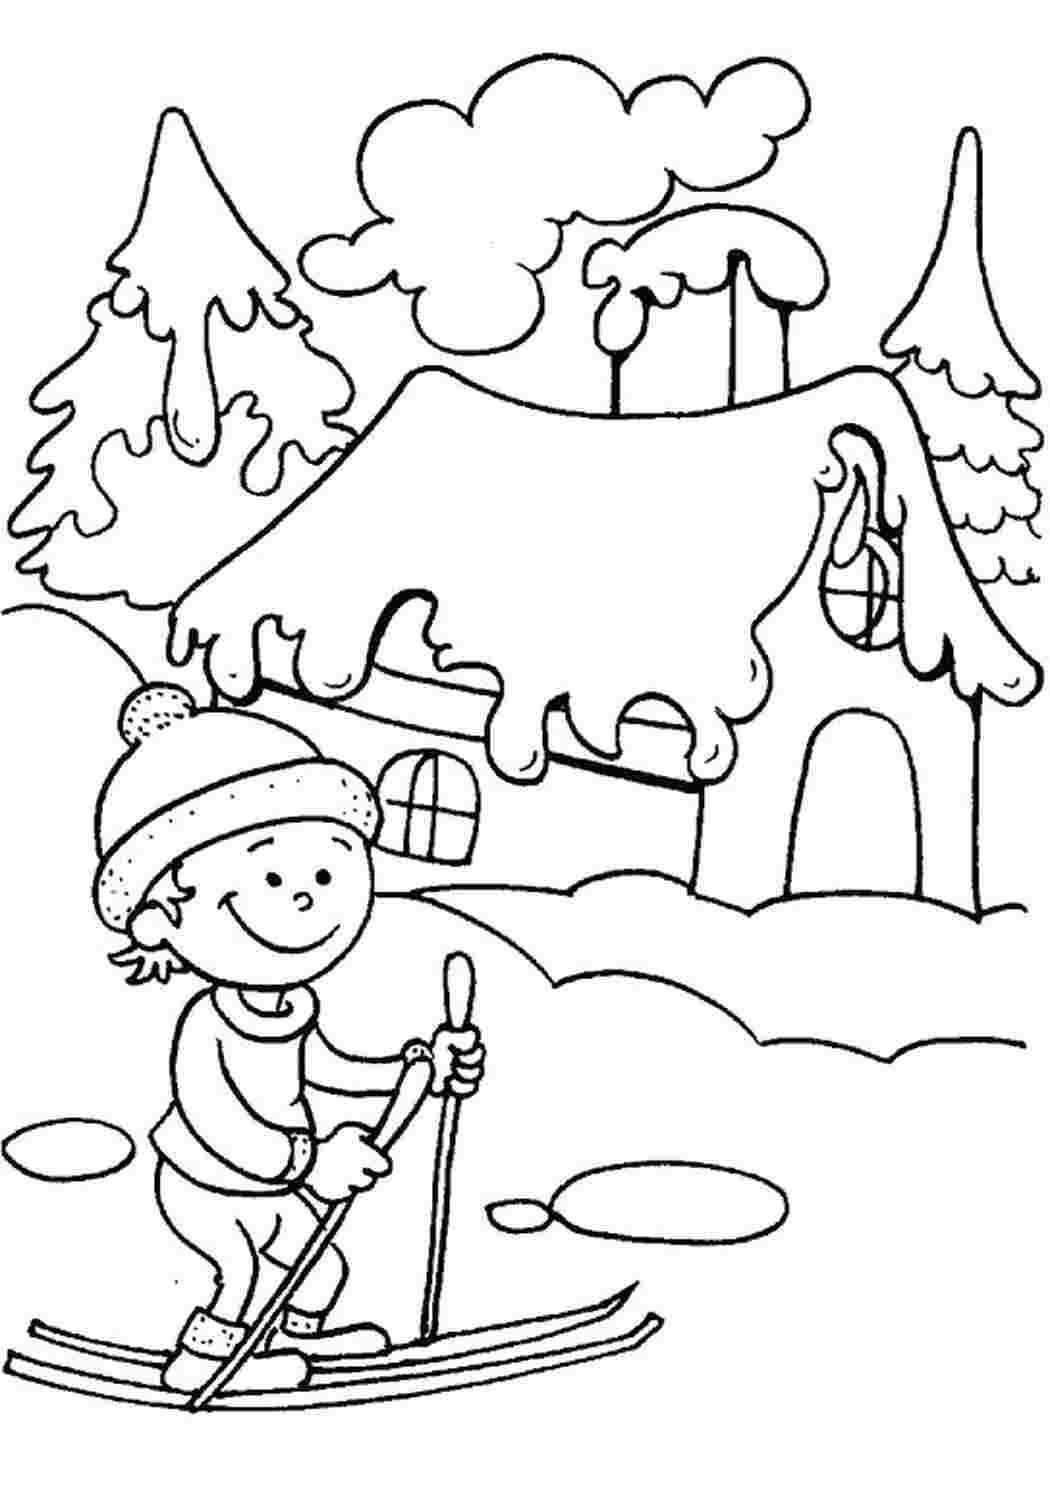 Сочинения на тему «Зима» 🌲 (10 Примеров) по классам